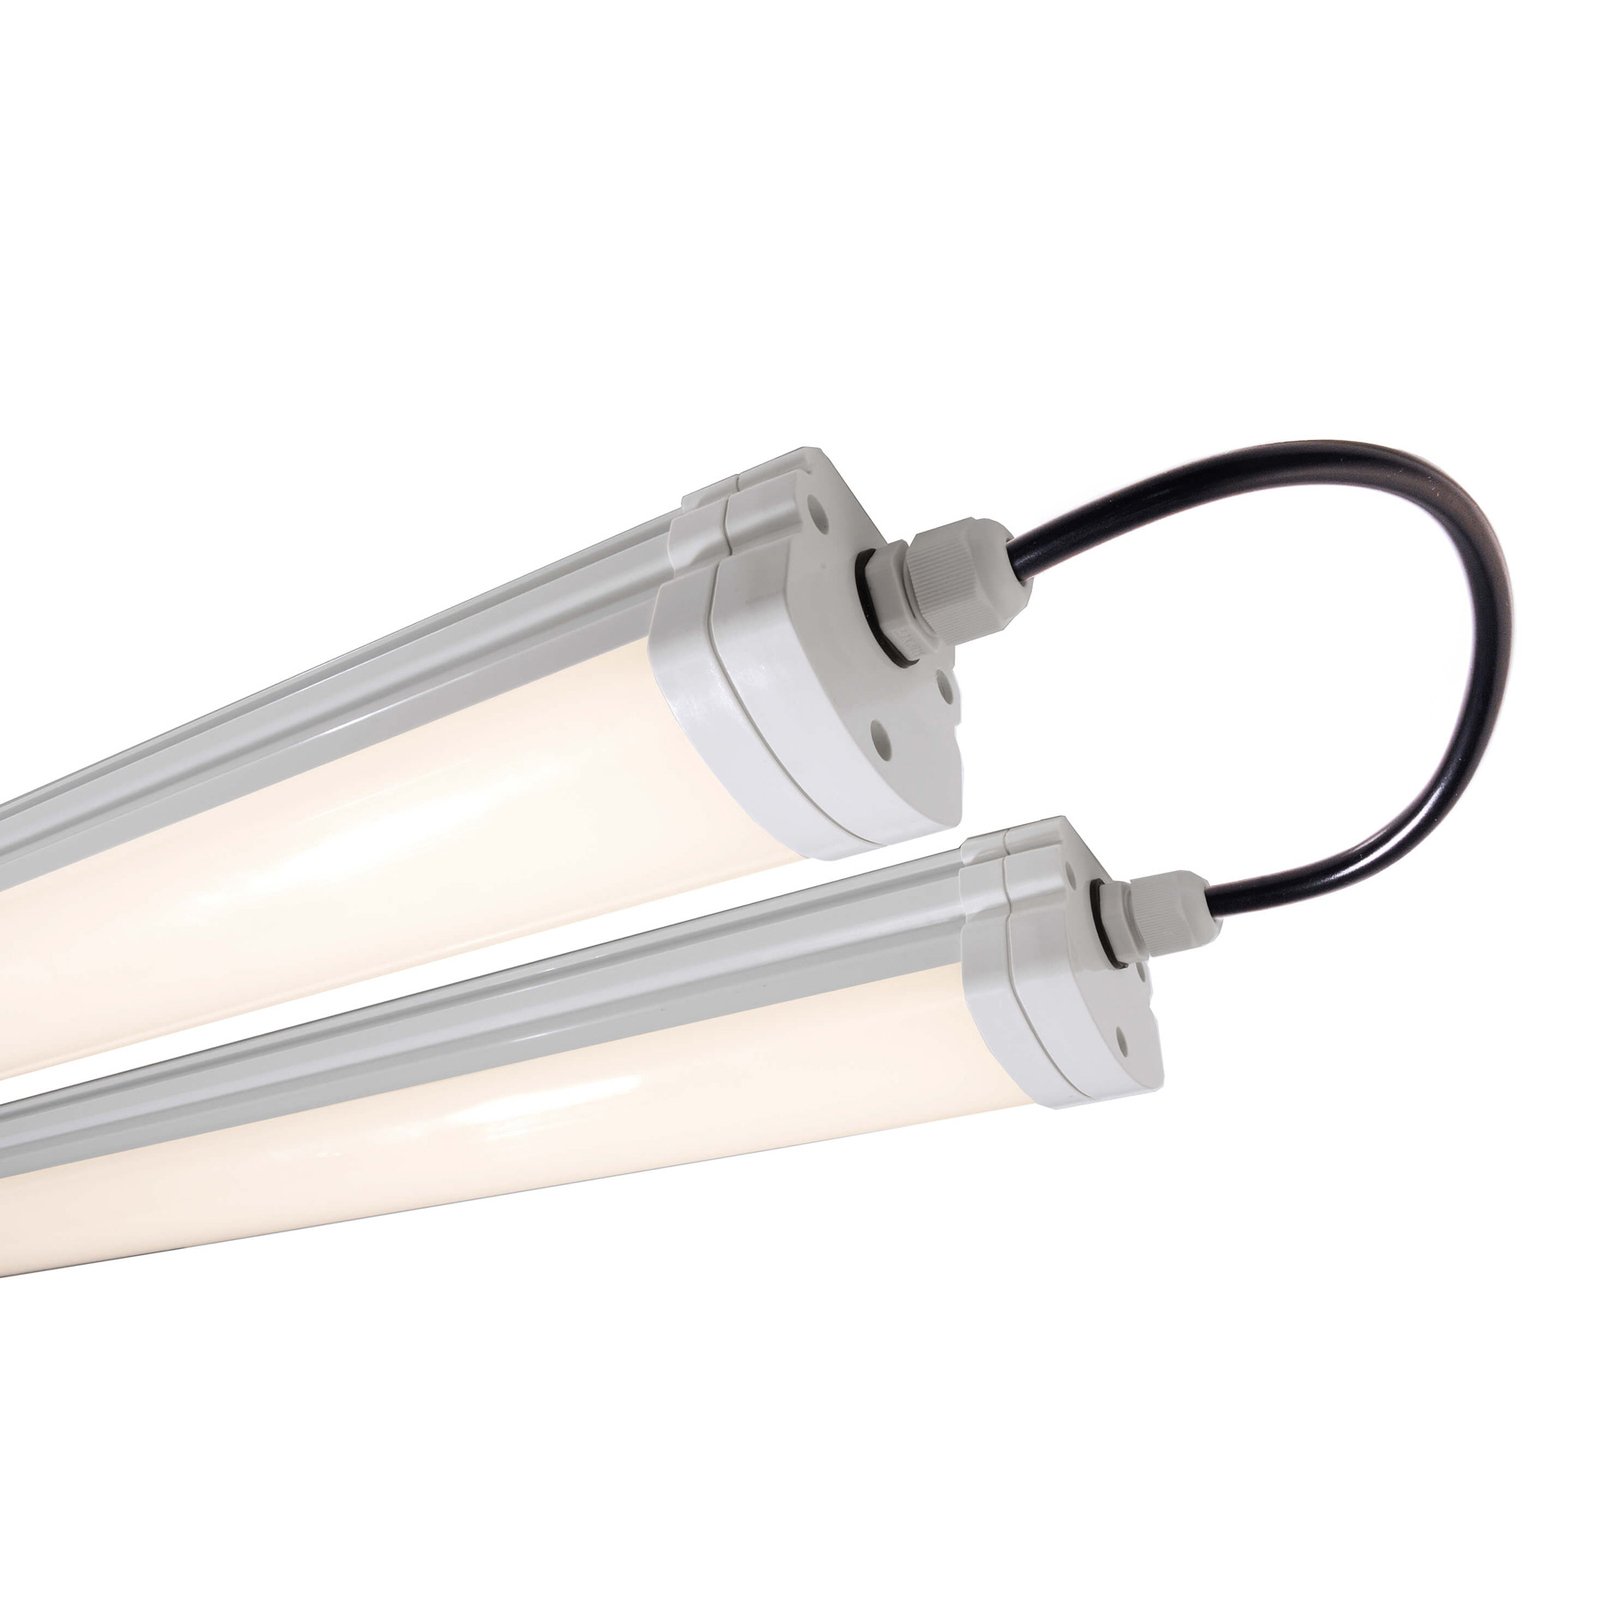 Luminaire LED Tri Proof 129,6 cm, 34,4 W